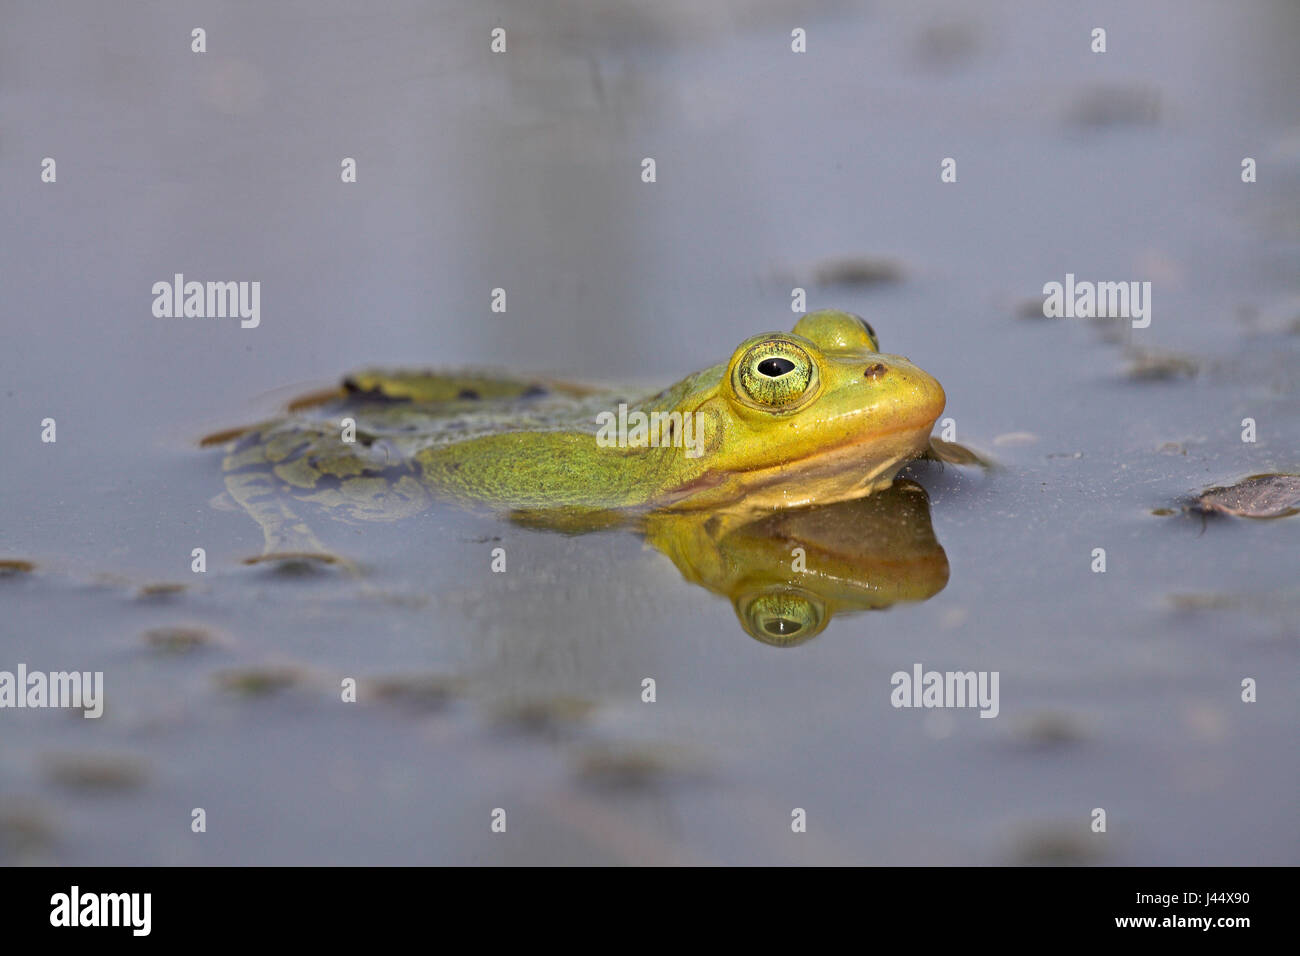 yellow male pool frog dure breeding season Stock Photo